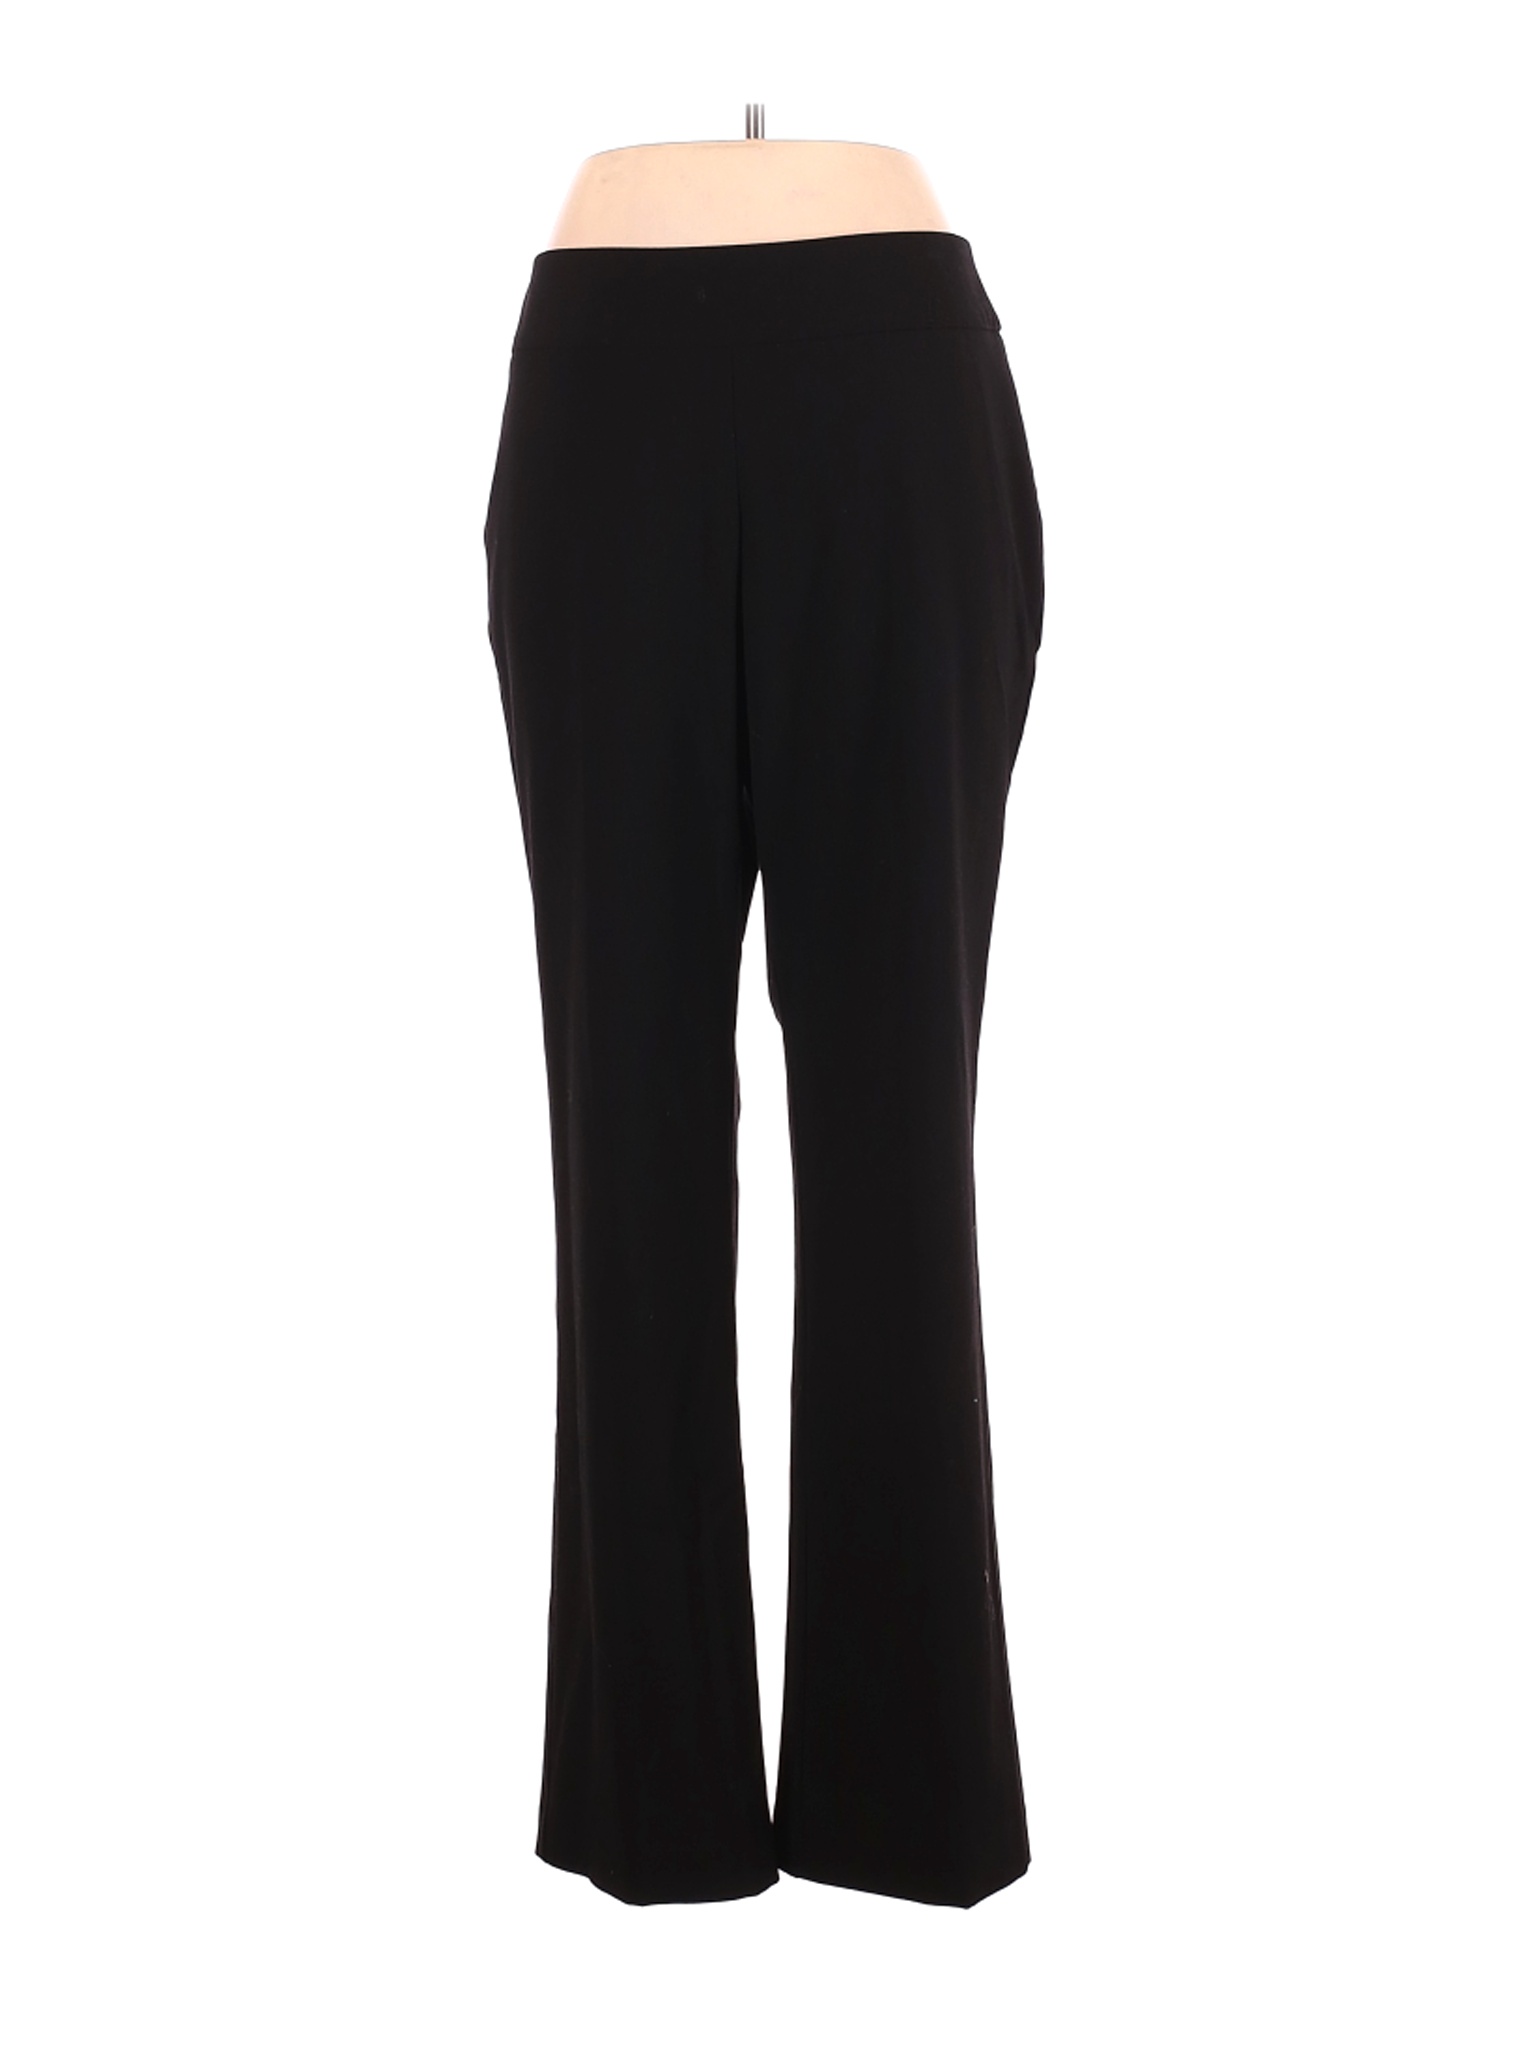 Roz & Ali Women Black Casual Pants 12 | eBay